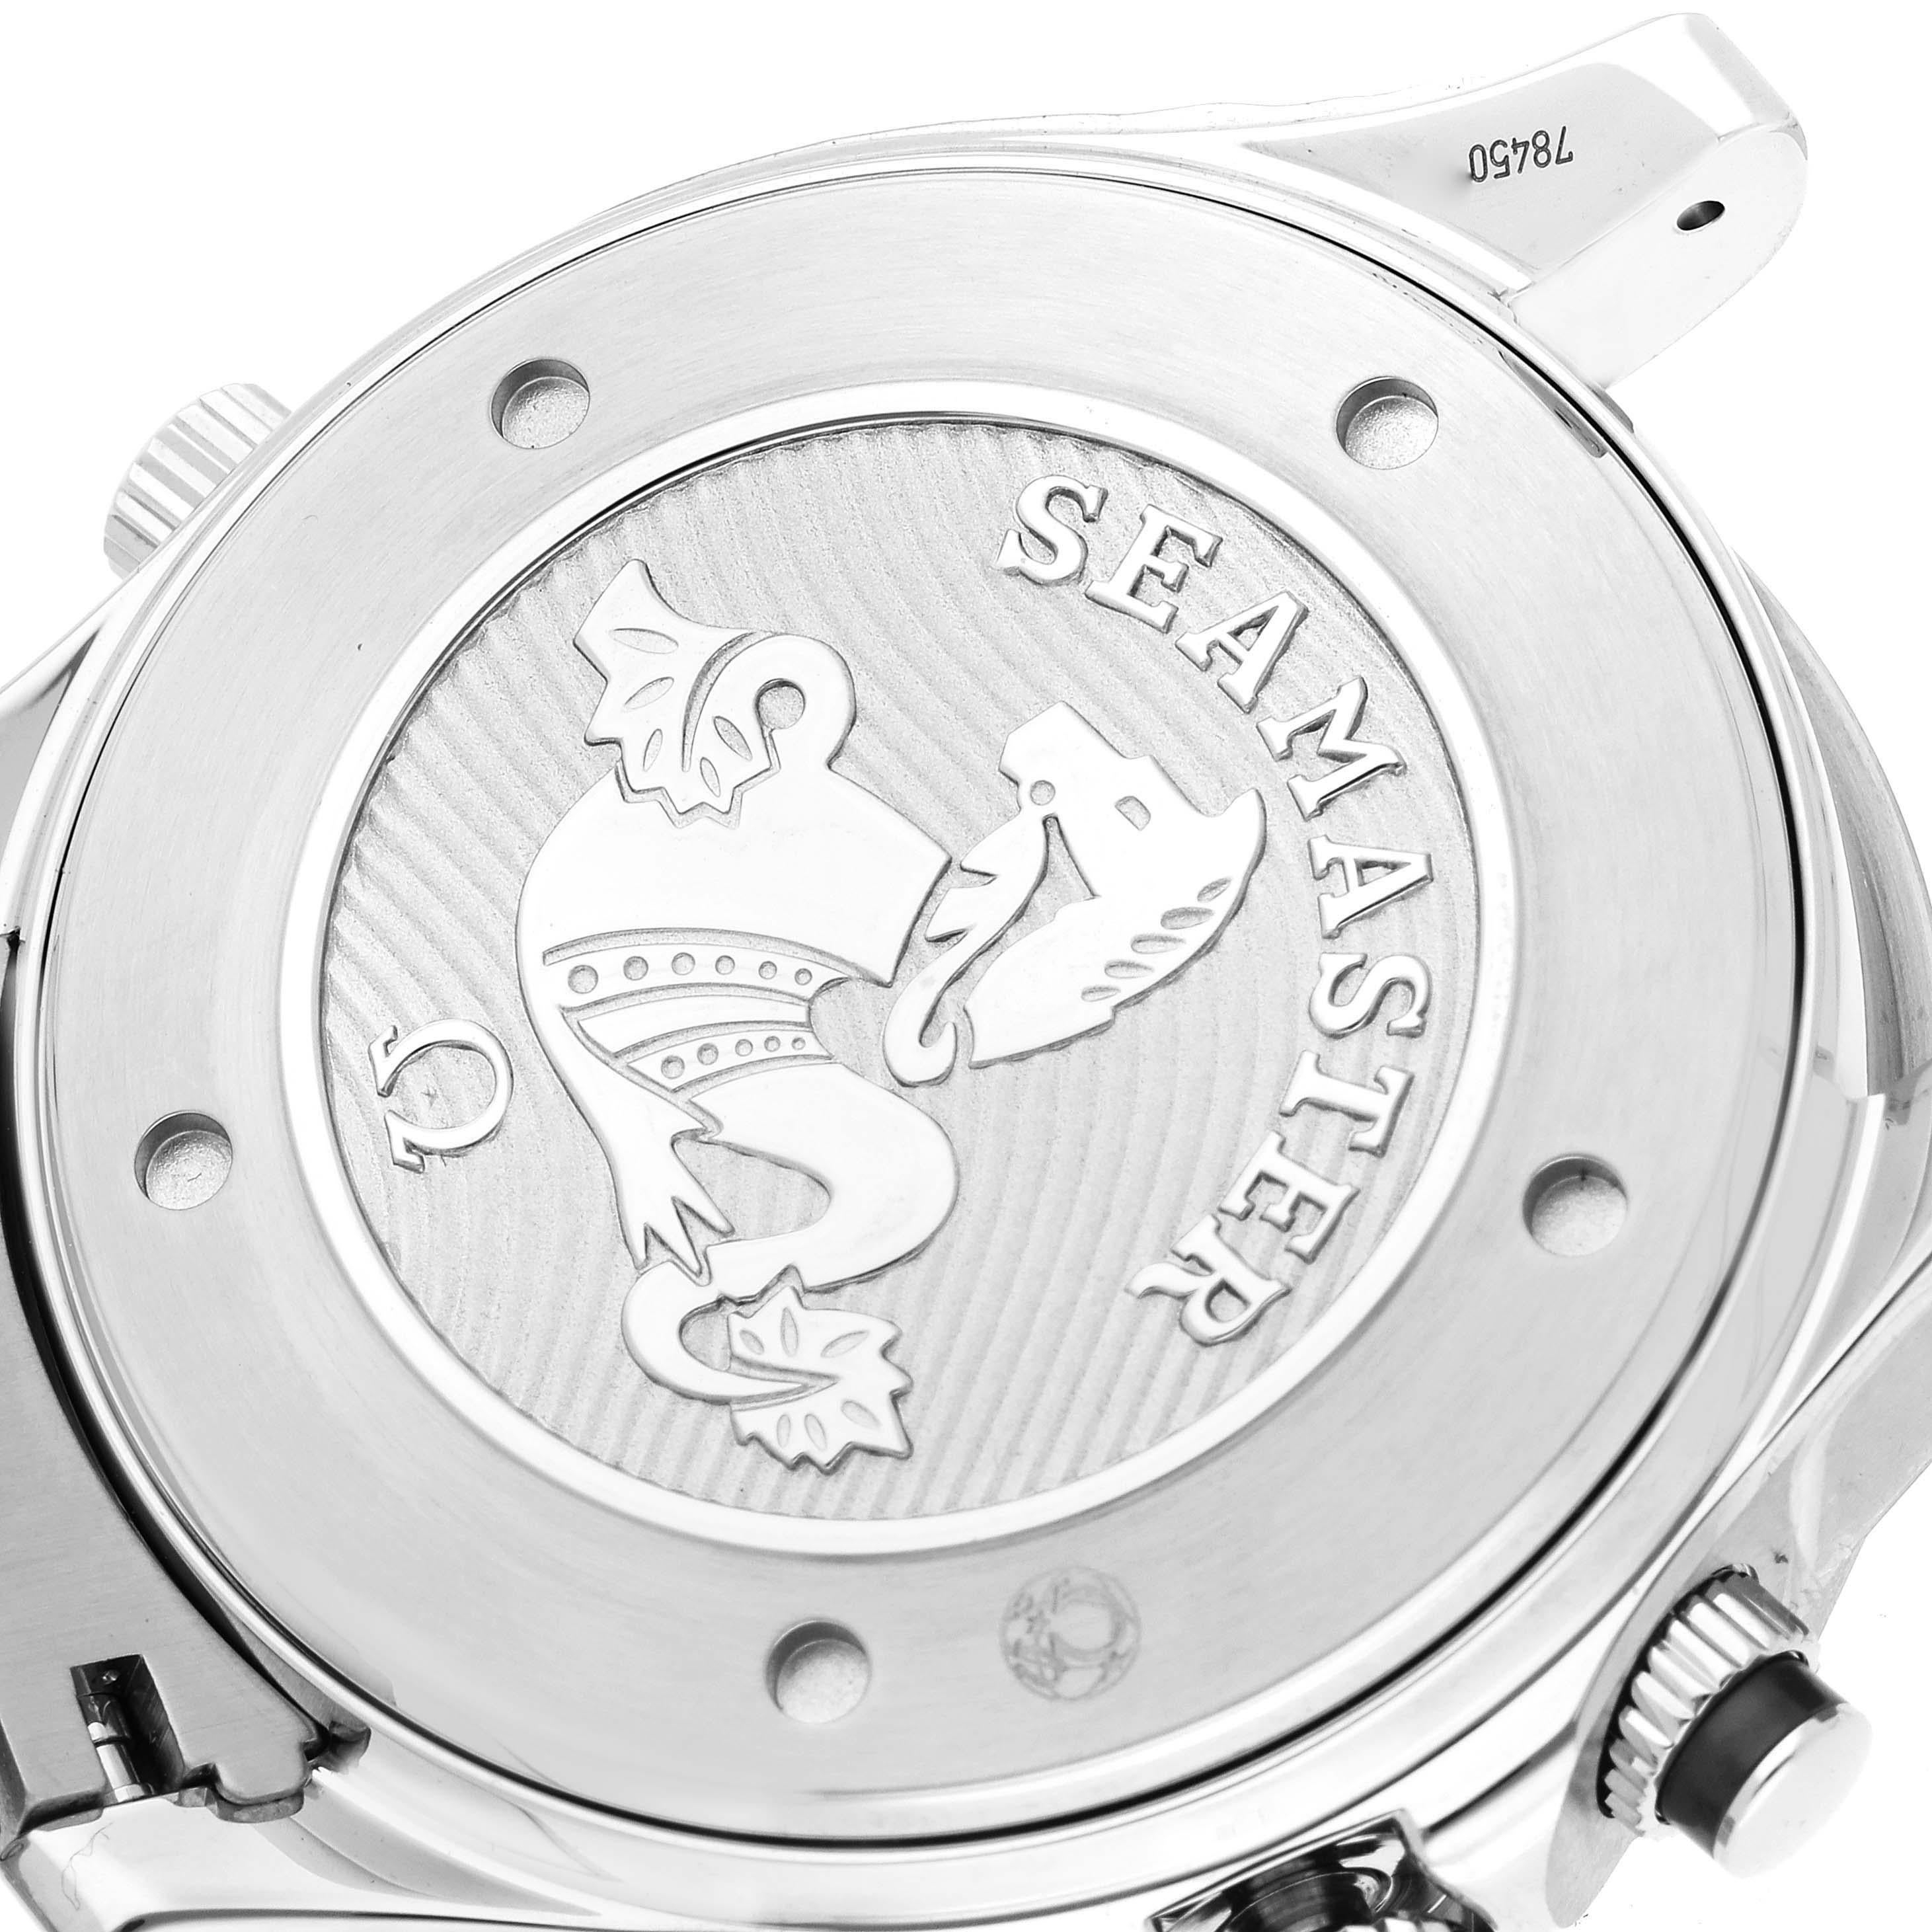 Omega Seamaster 300 GMT Steel Mens Watch 212.30.44.52.03.001 Box Card 1